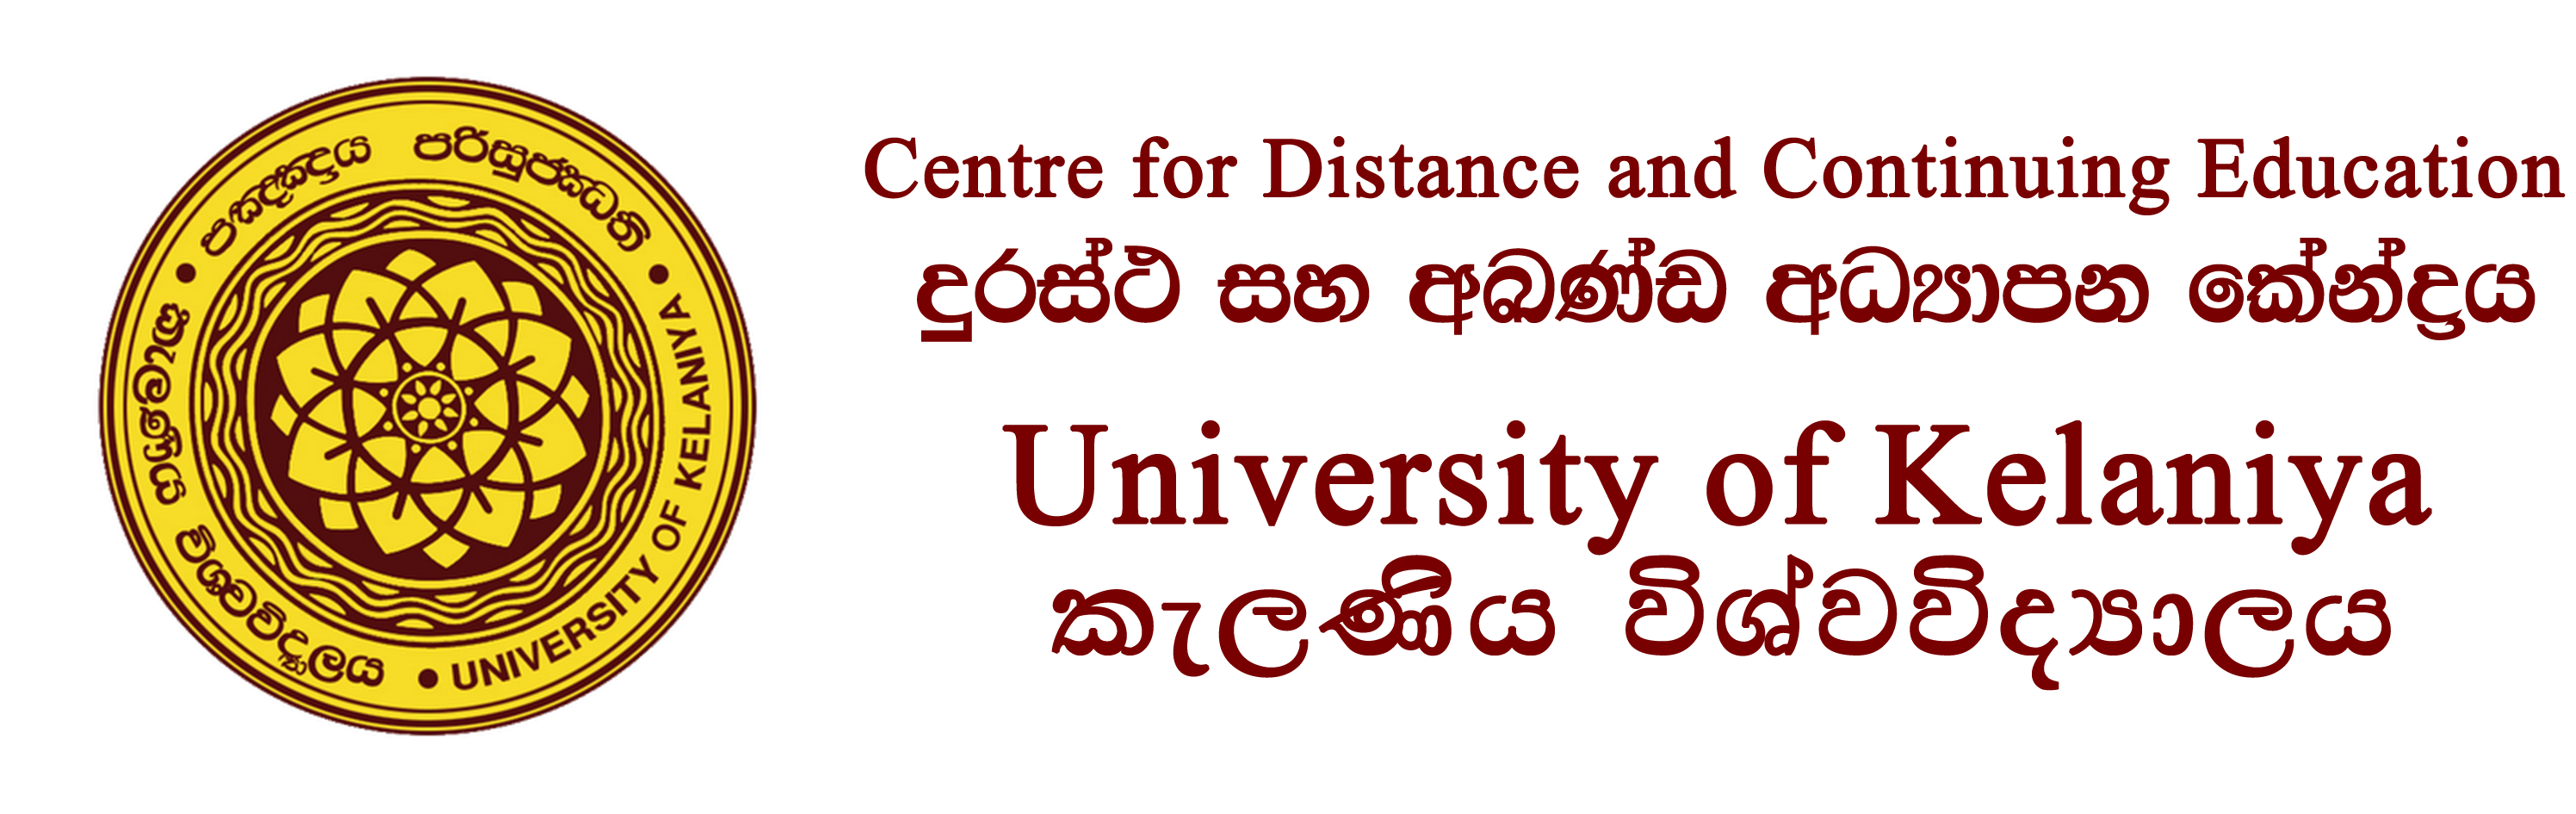 Centre for Distance Continuing Education (CDCE), University of Kelaniya